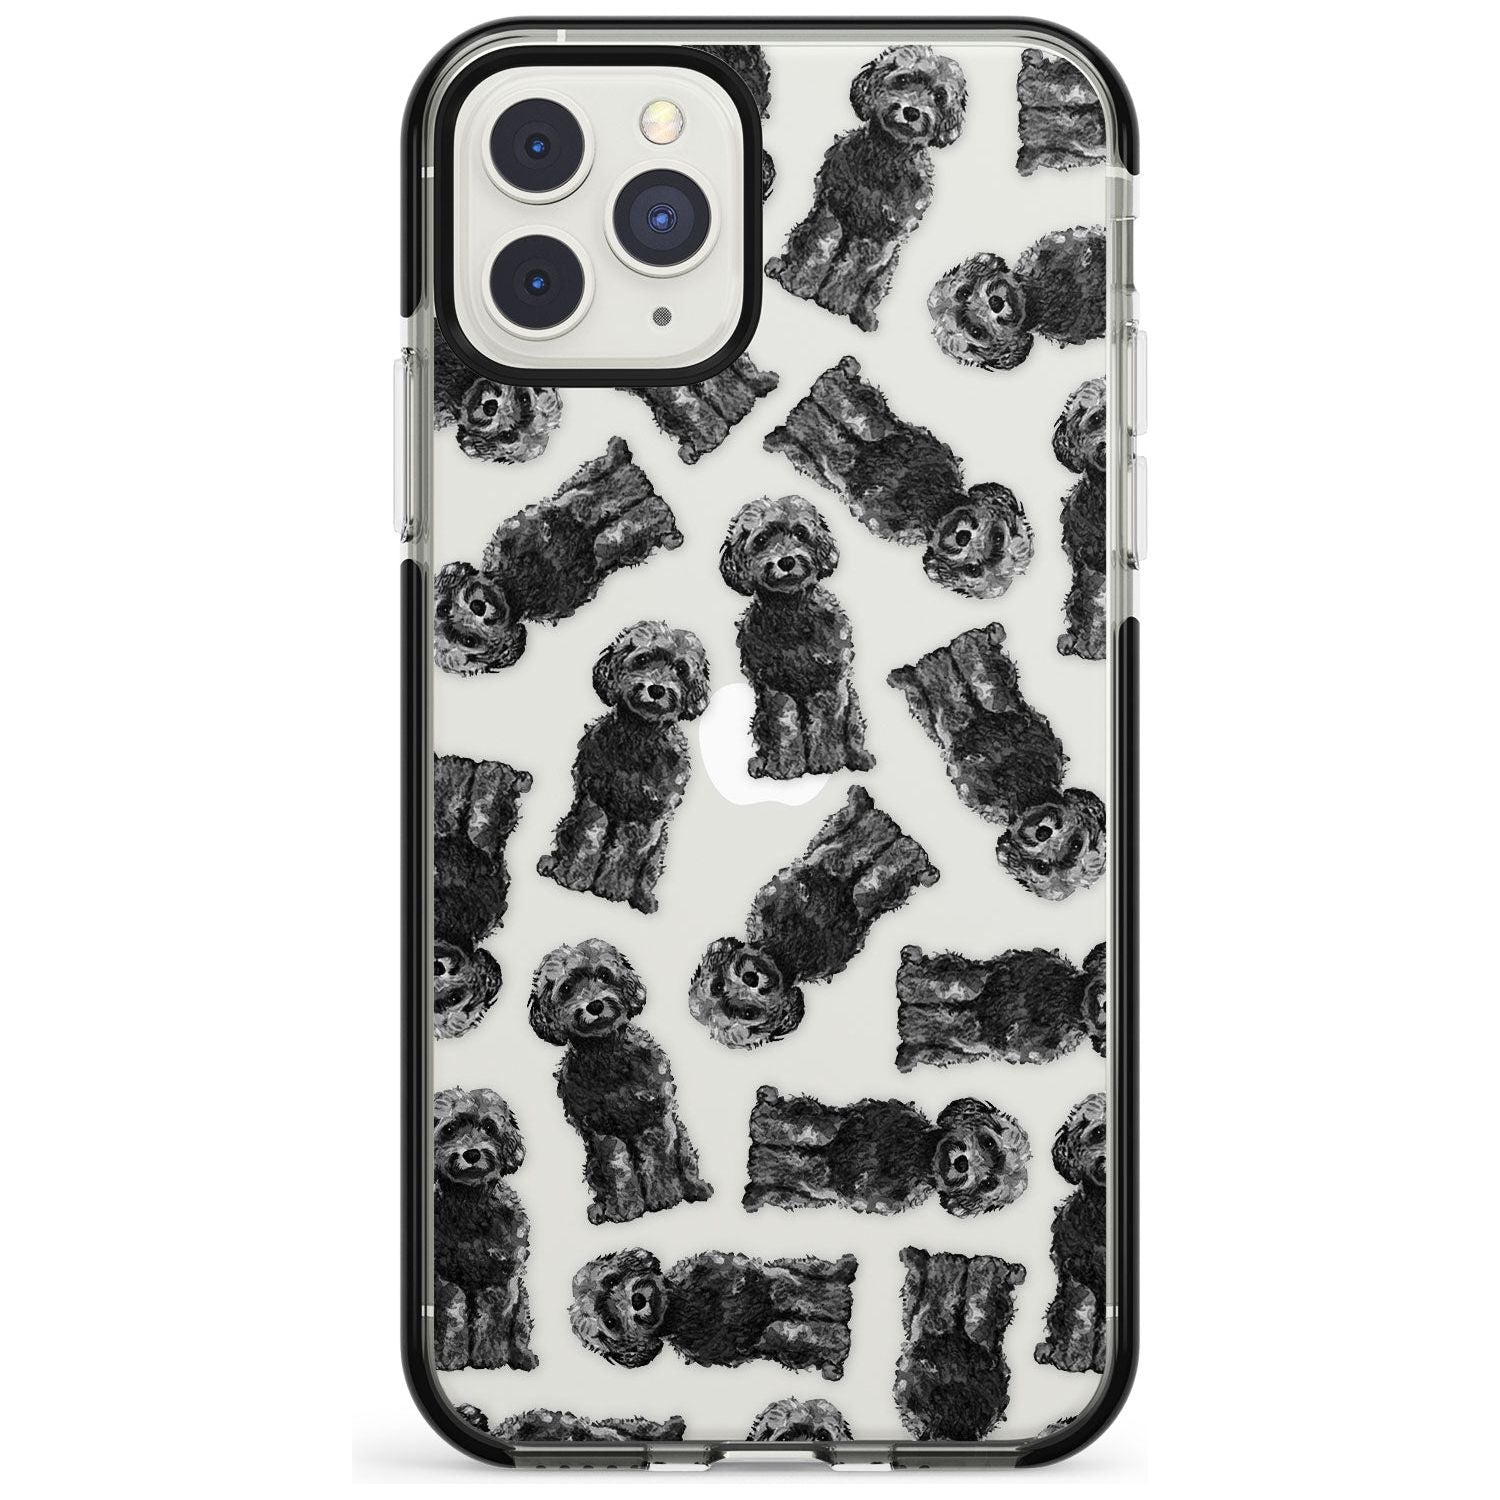 Cockapoo (Black) Watercolour Dog Pattern Black Impact Phone Case for iPhone 11 Pro Max